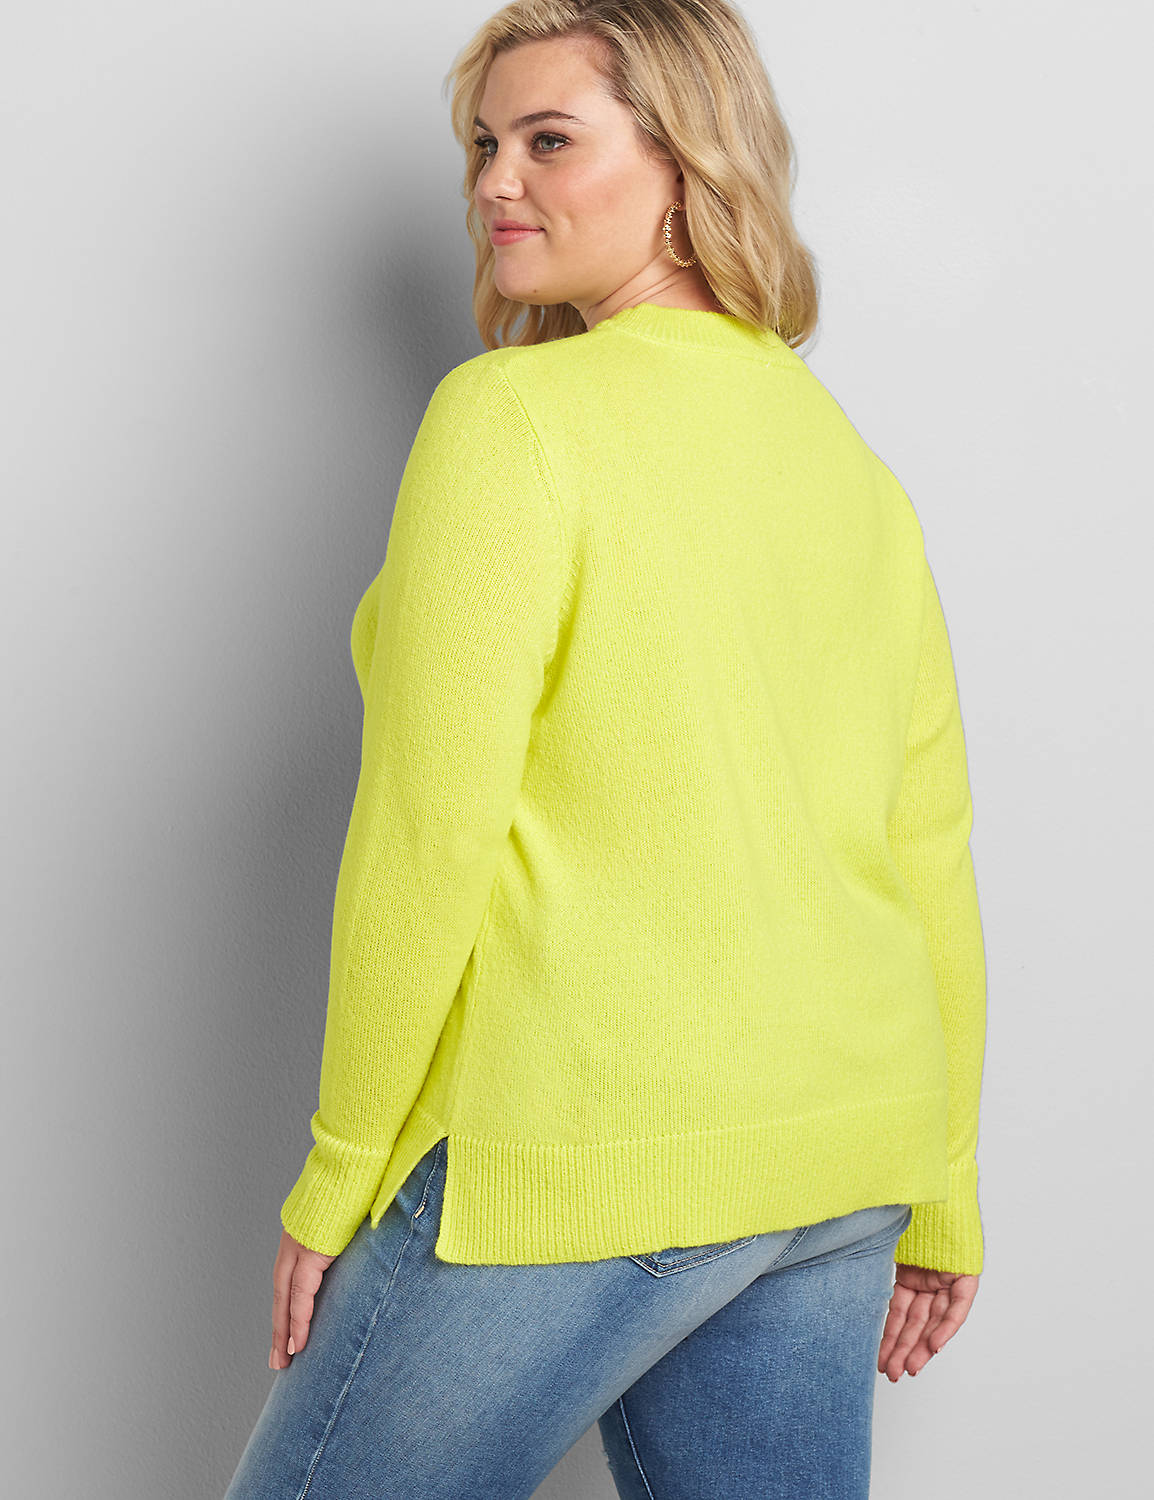 Long Sleeve Crew Neck Sweater in Neon Yarn 1117040:PANTONE Limeade:18/20 Product Image 2